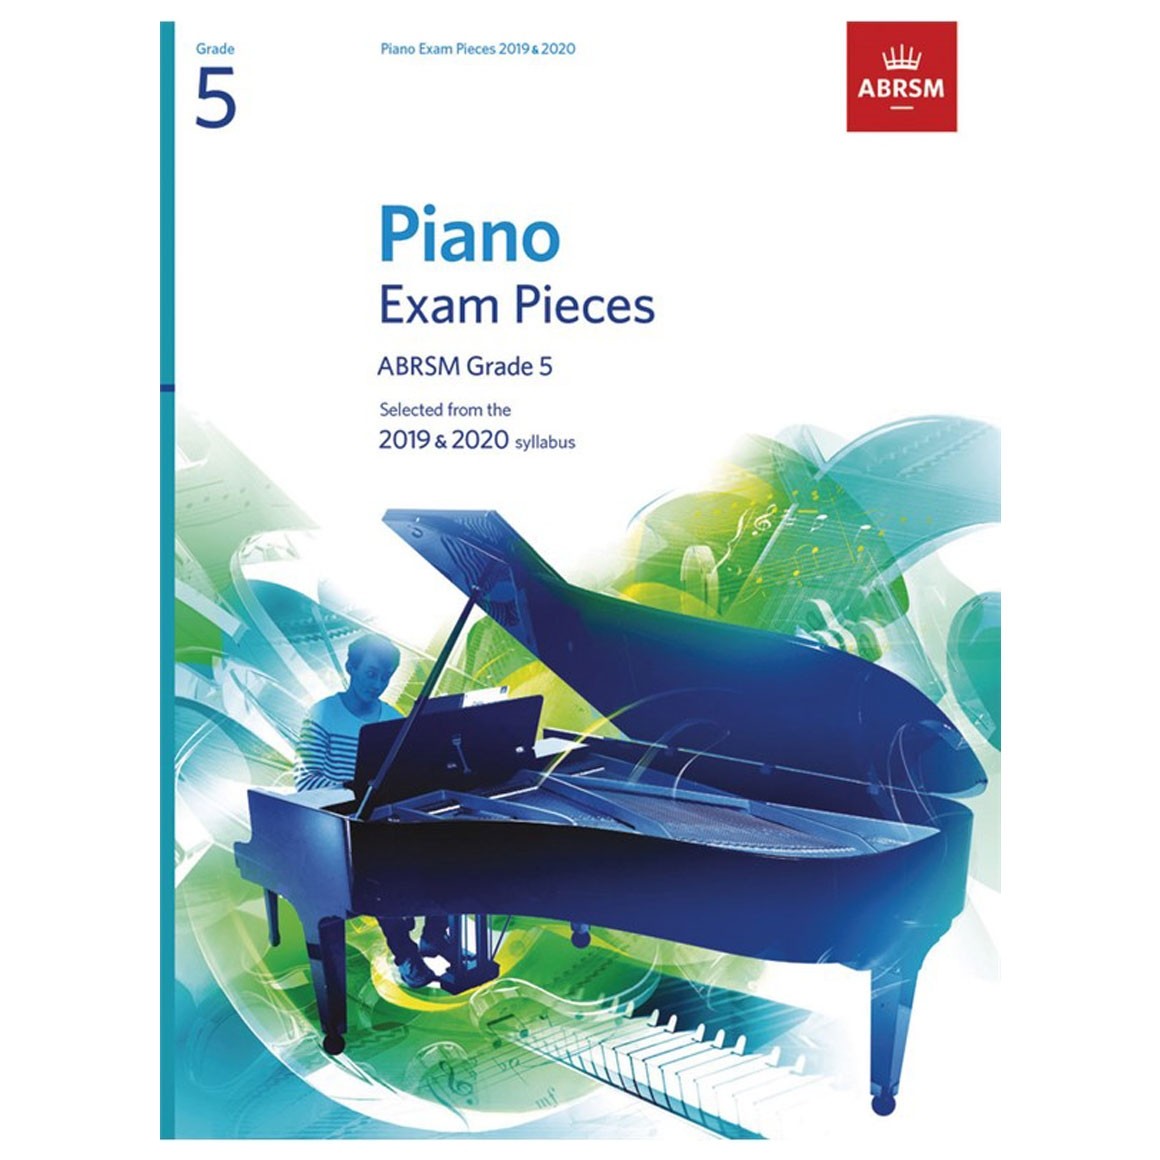 ABRSM Piano Exam Pieces 2019-2020 Book Only - Grade 5